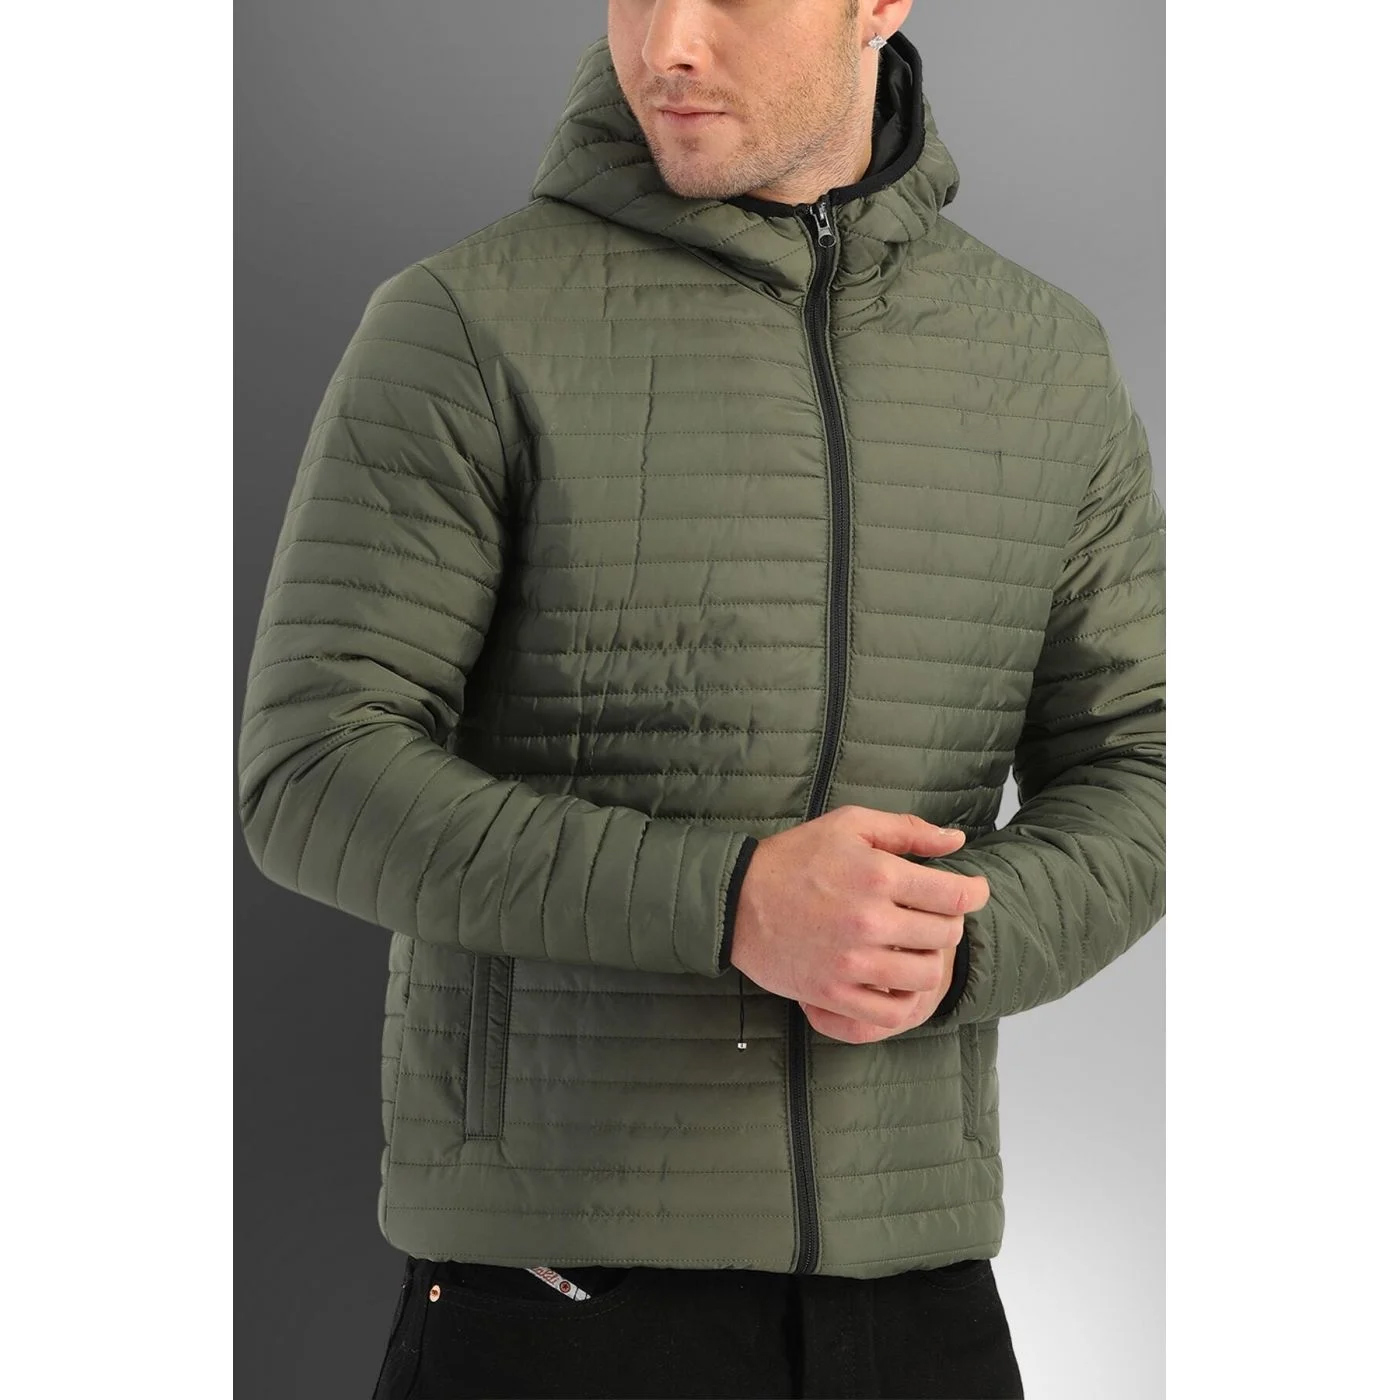 D1fference Pánsky khaki zimný kabát s kapucňou, vodeodolný a vetruodolný. Vnútorná podšívka.